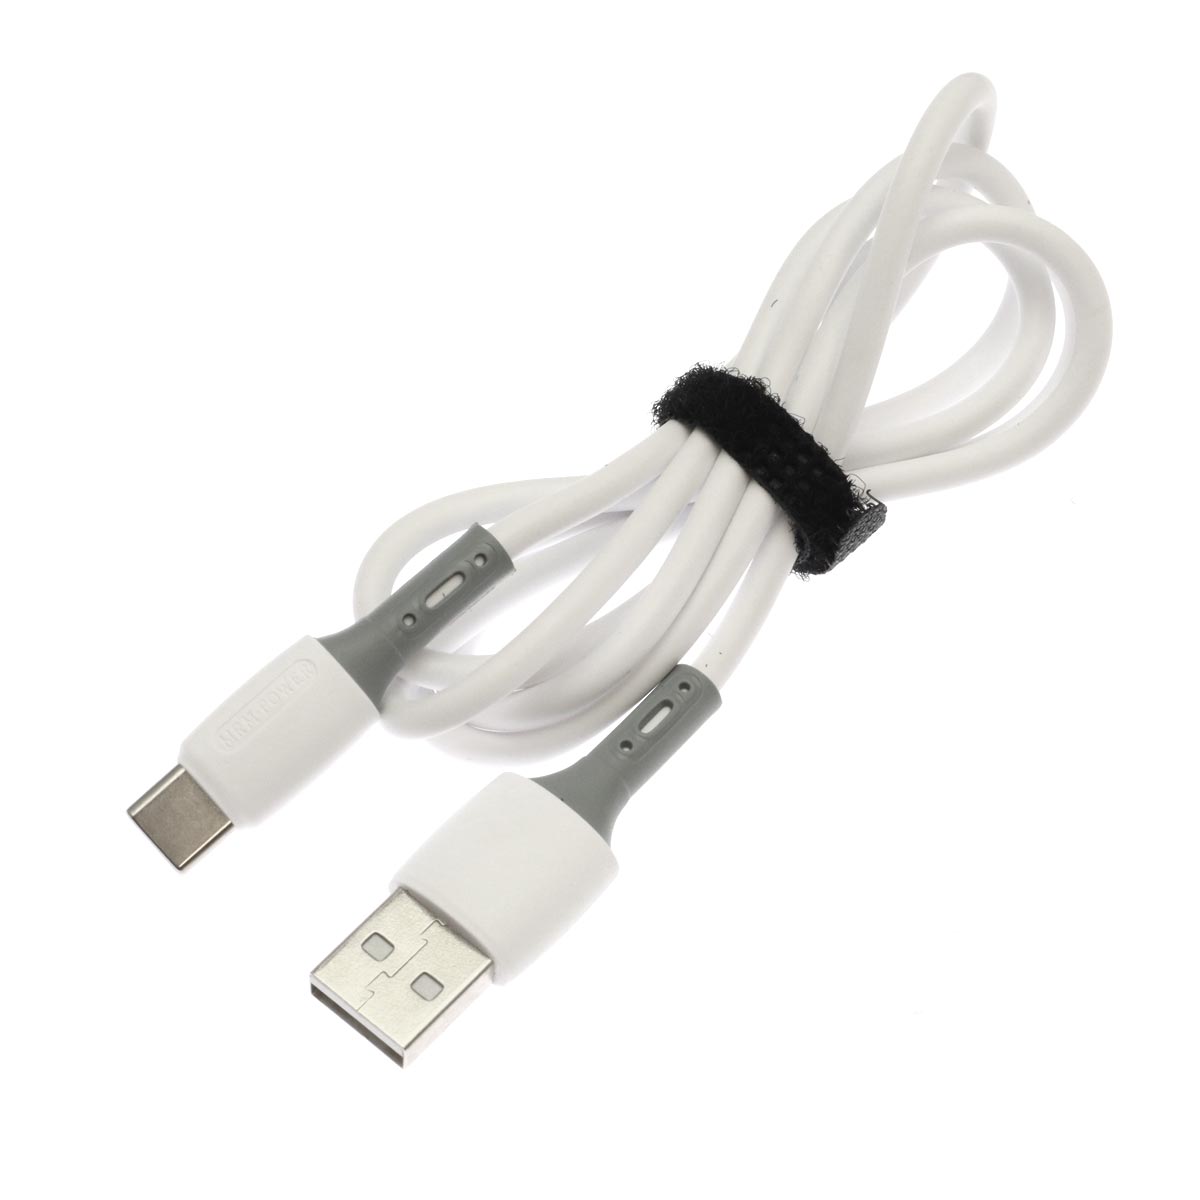 Кабель MRM G6 USB Type C, длина 1 метр, цвет белый